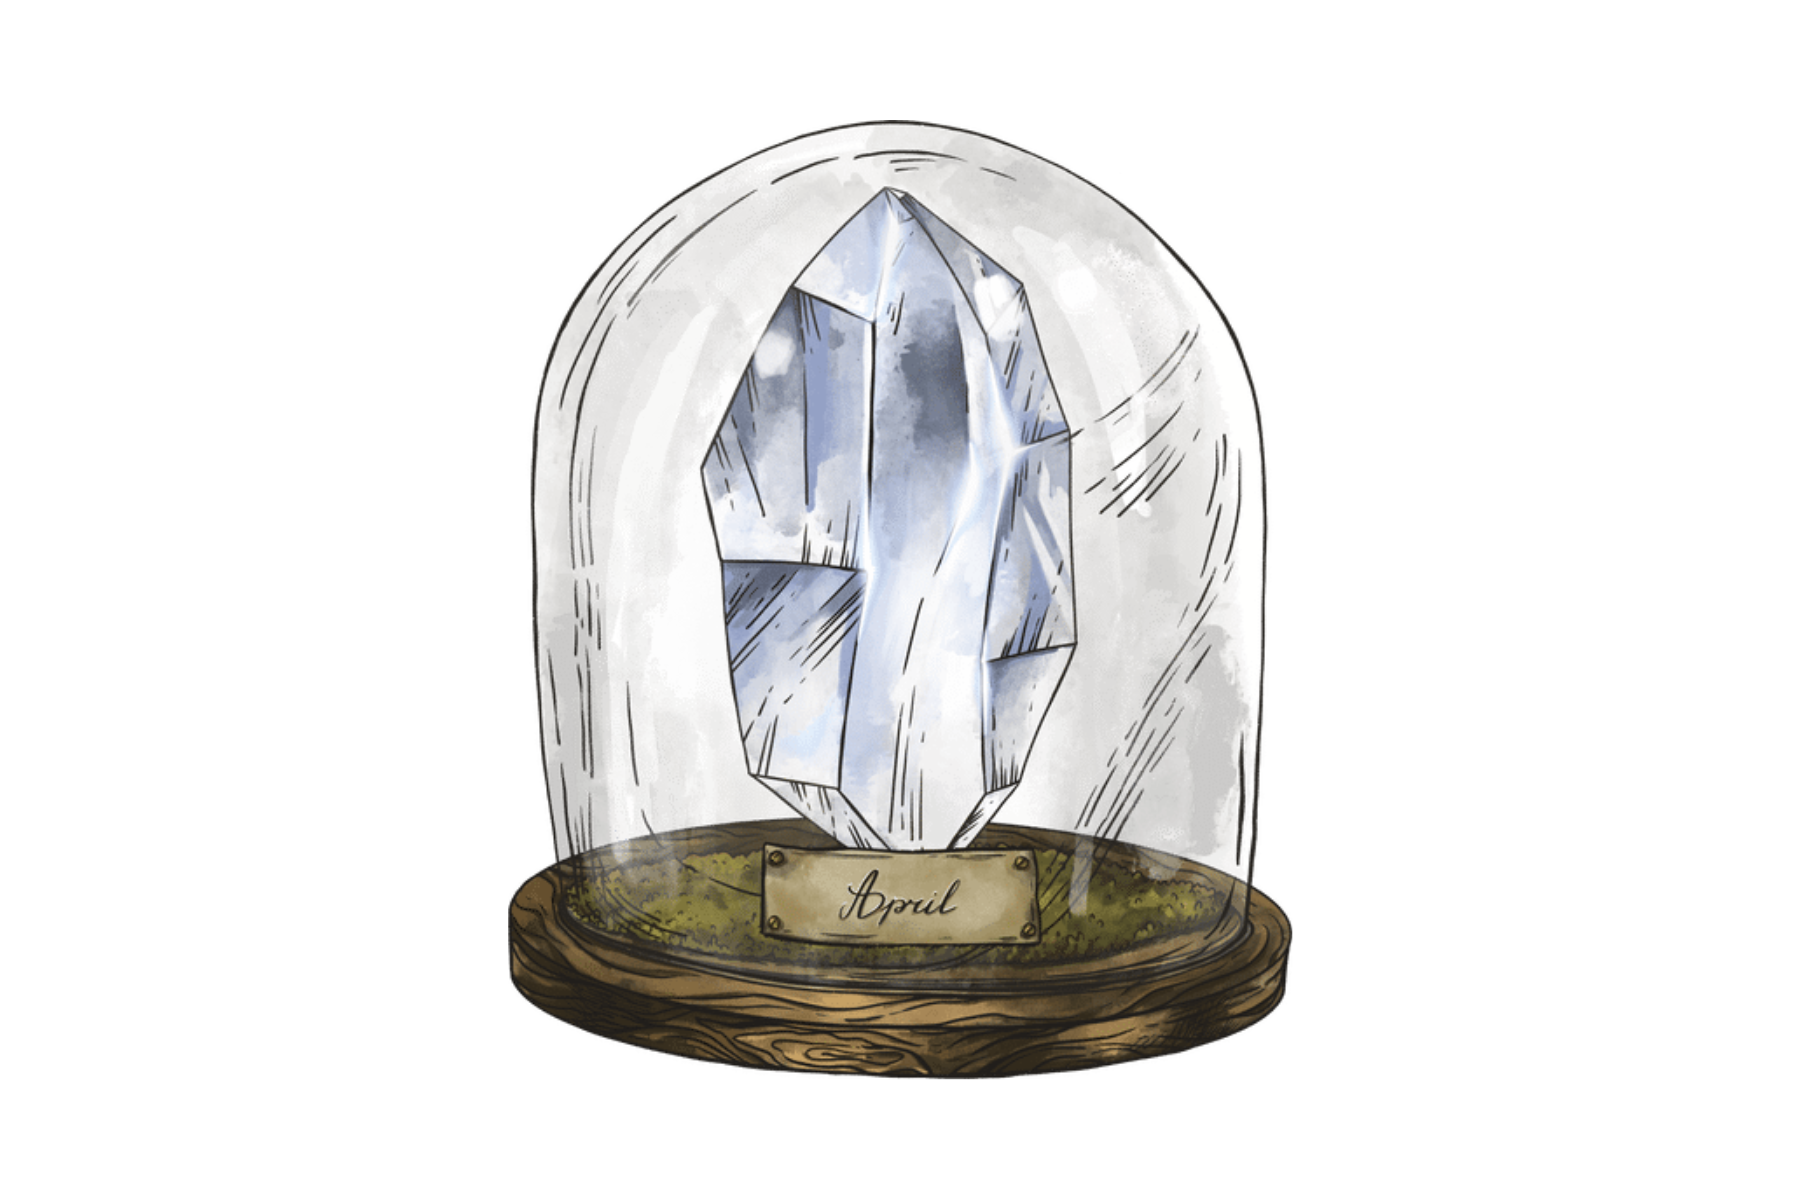 A glass jar with a diamond birthstone